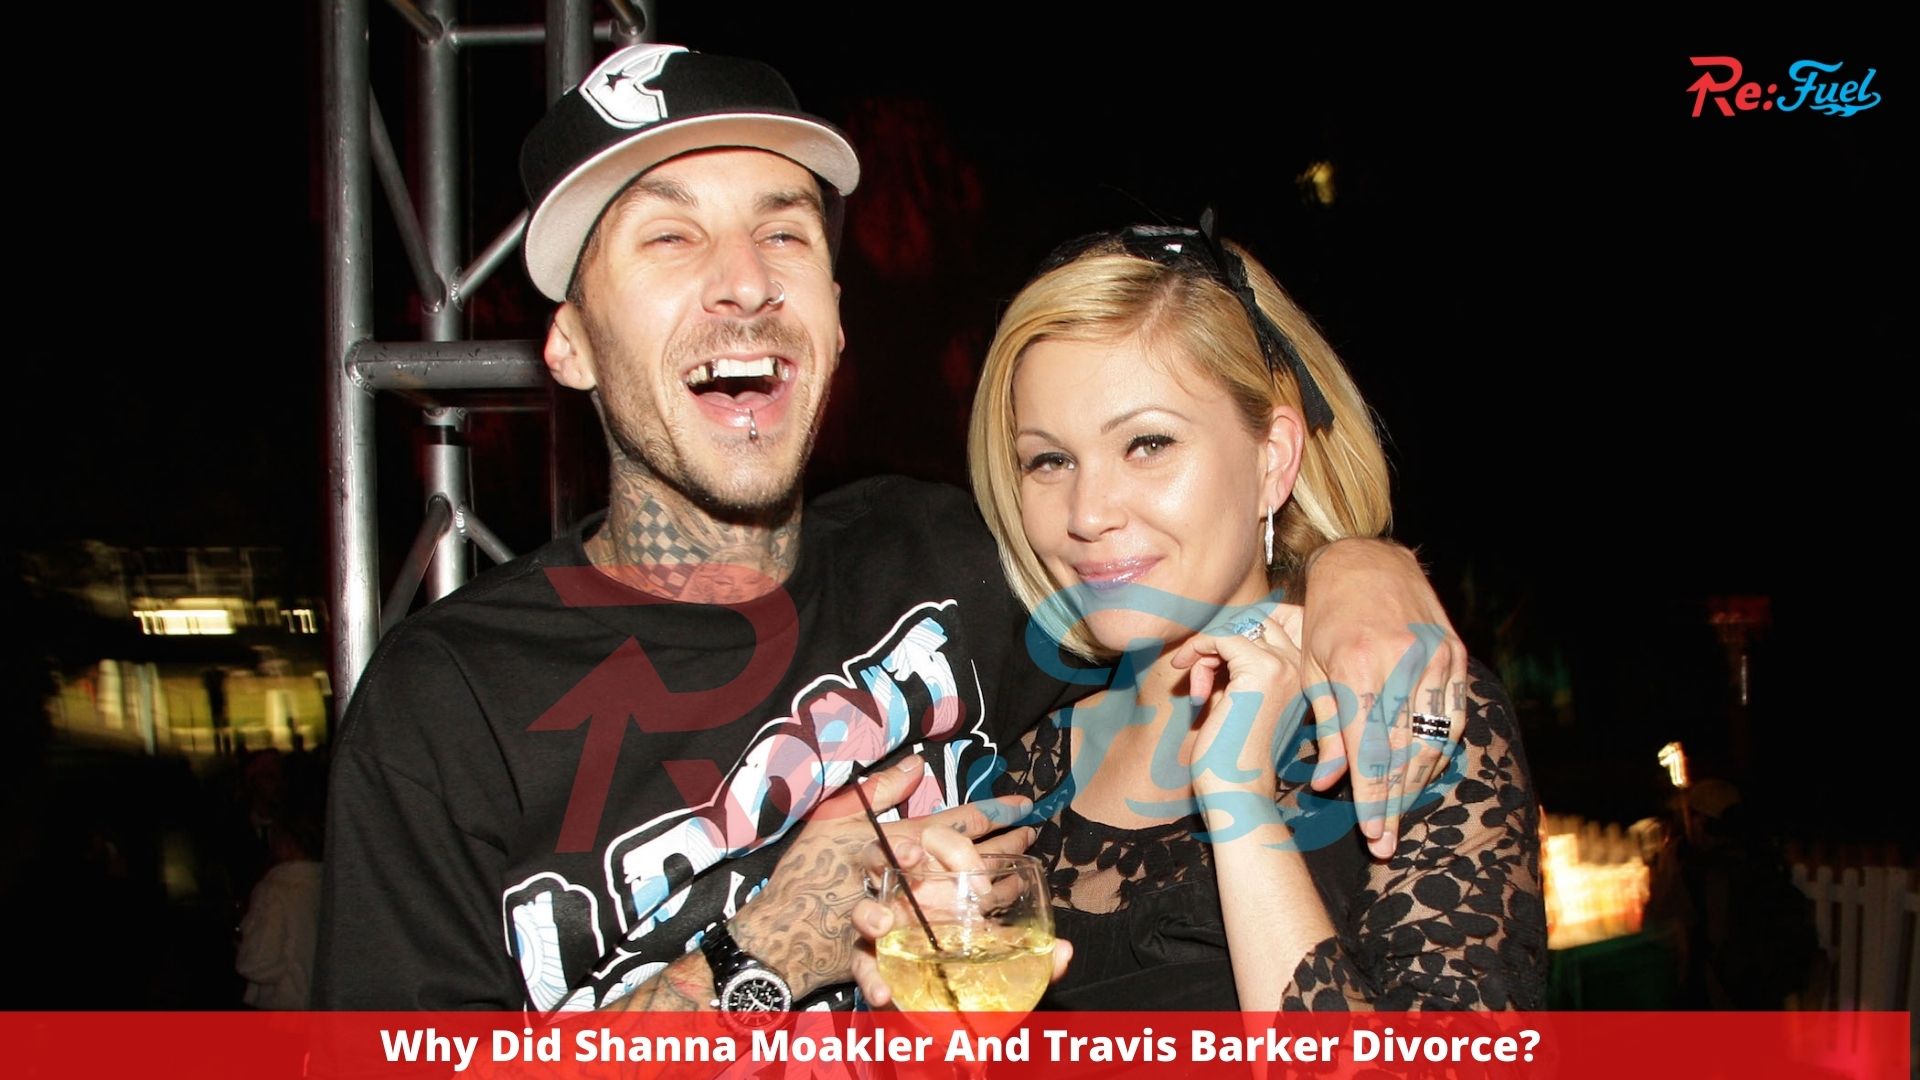 Why Did Shanna Moakler And Travis Barker Divorce?